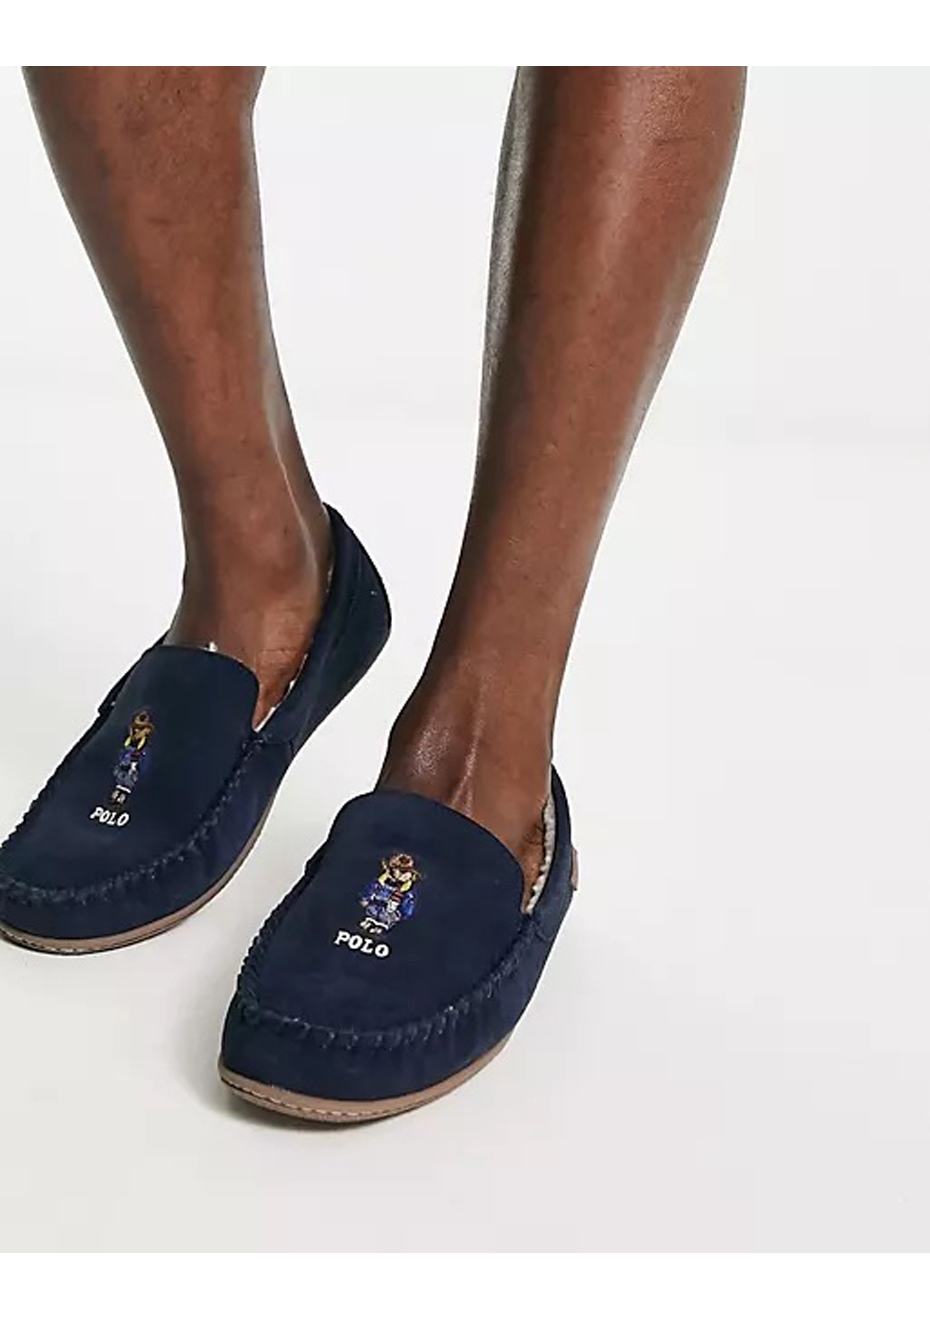 Polo Ralph Lauren DECLAN BEAR Mens Moccasin Slippers Black | Shuperb.com